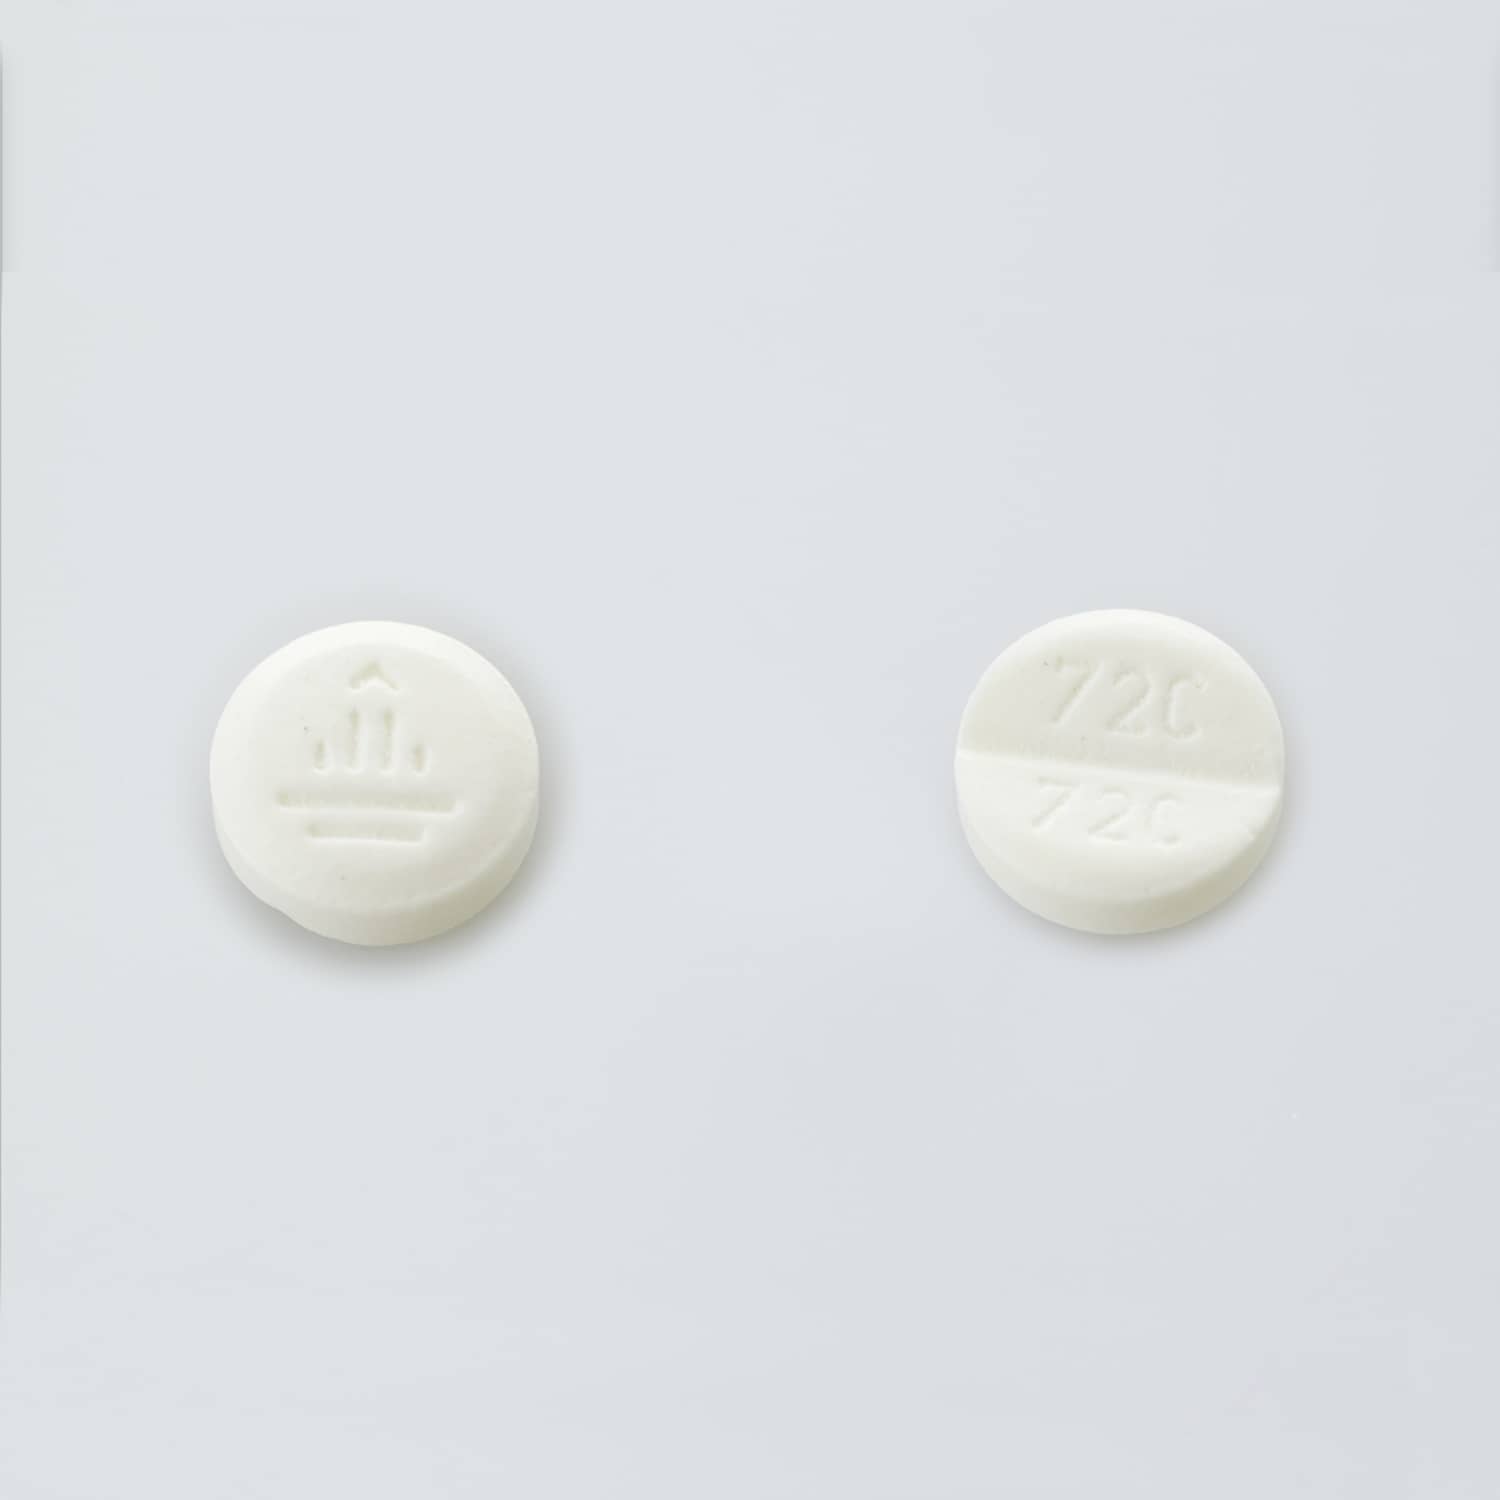 Surbronc 60 mg